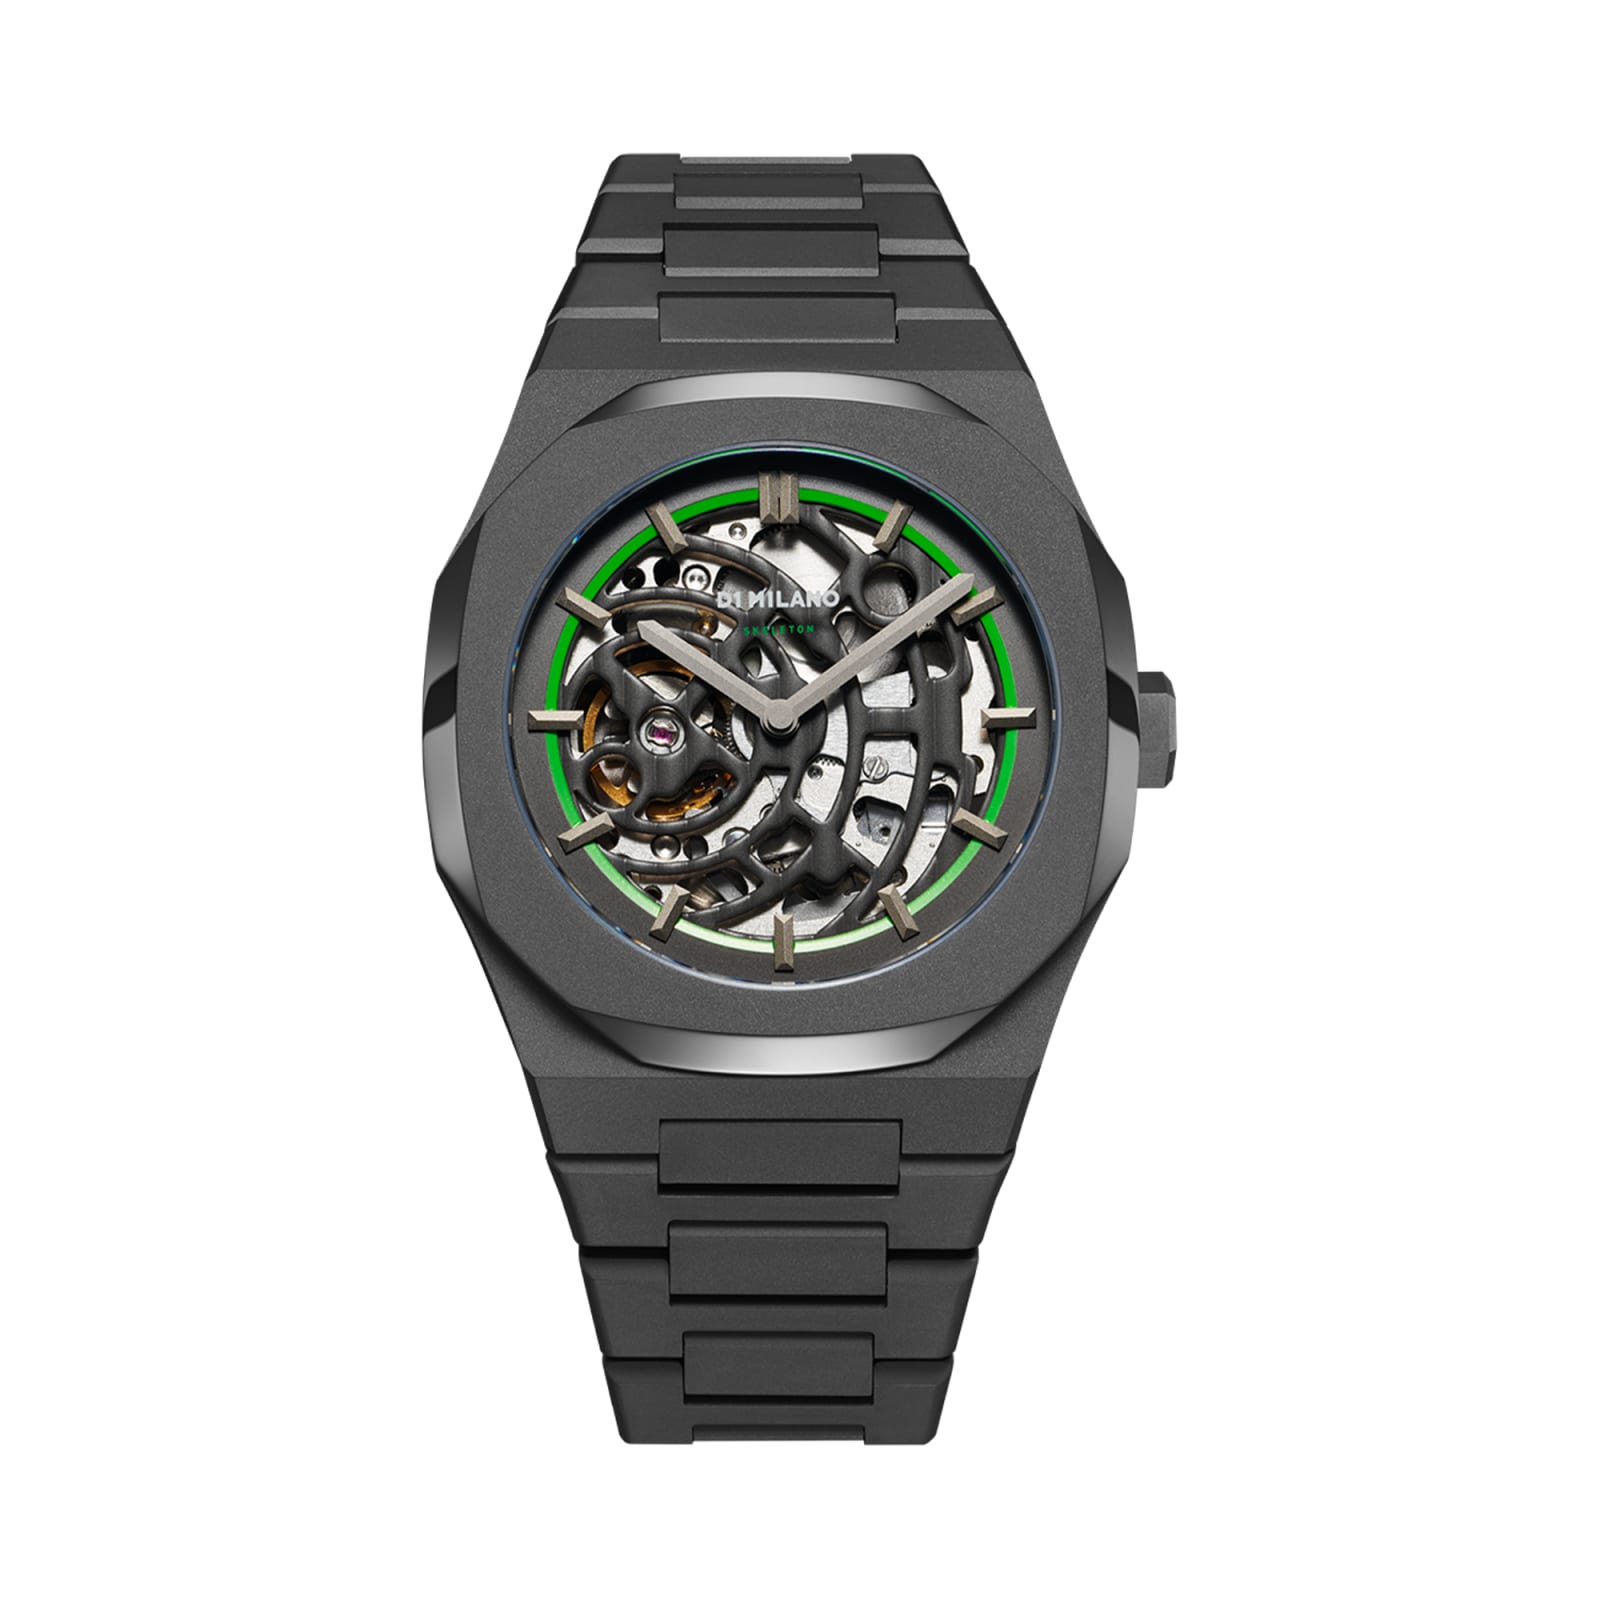 D1 Milano Sandblast Green Watches